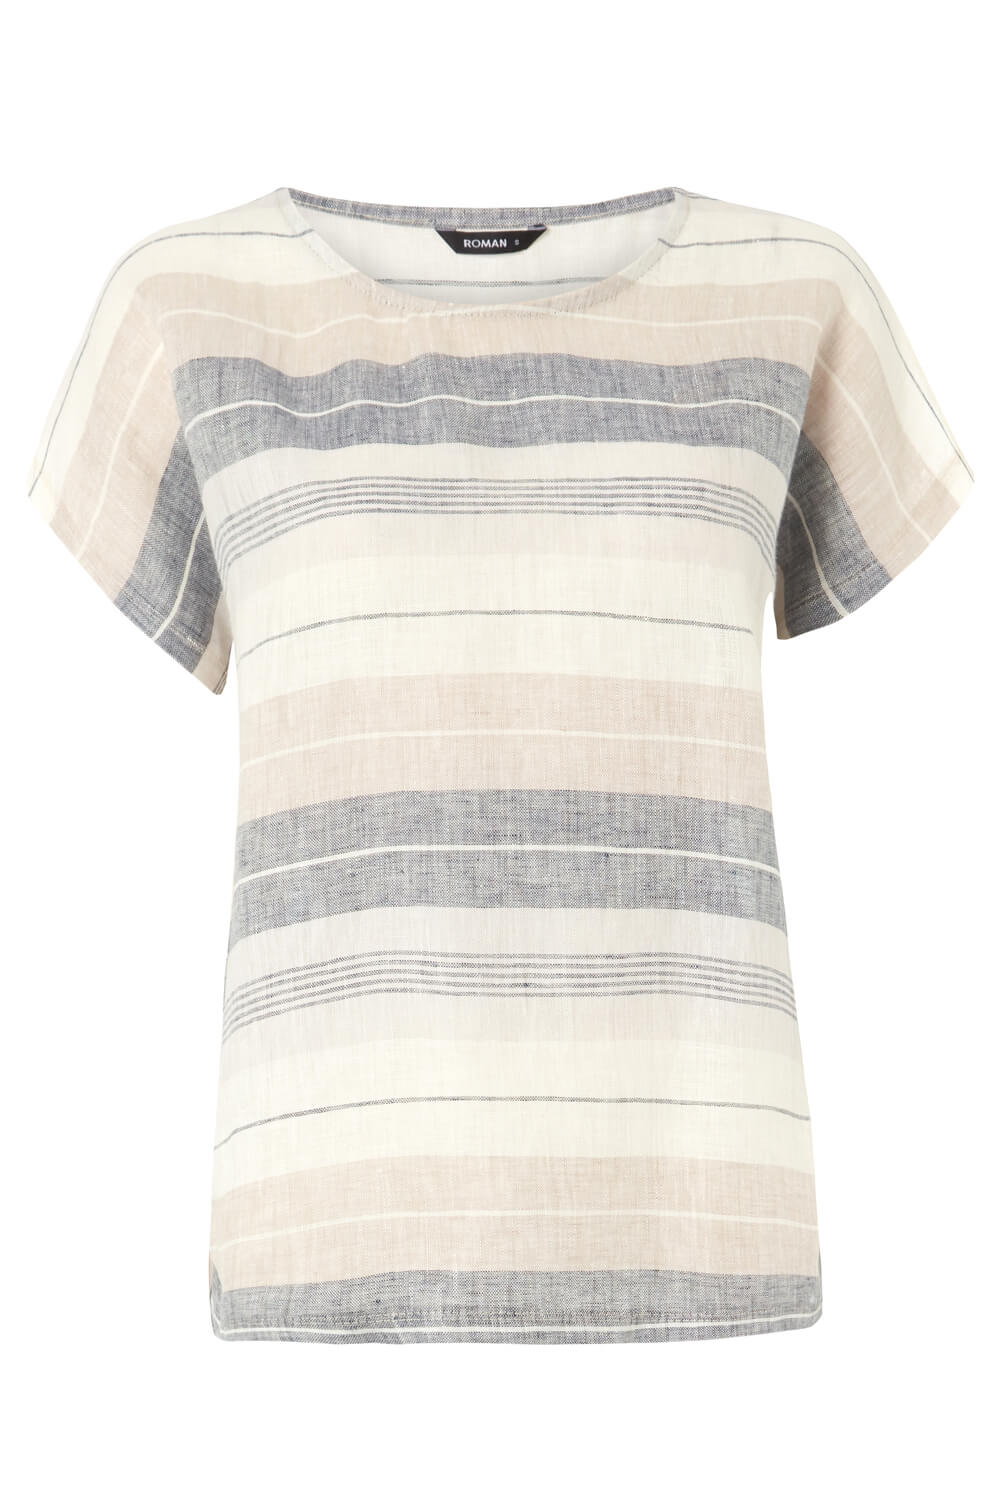 Neutral Stripe Print Linen T-Shirt, Image 5 of 5